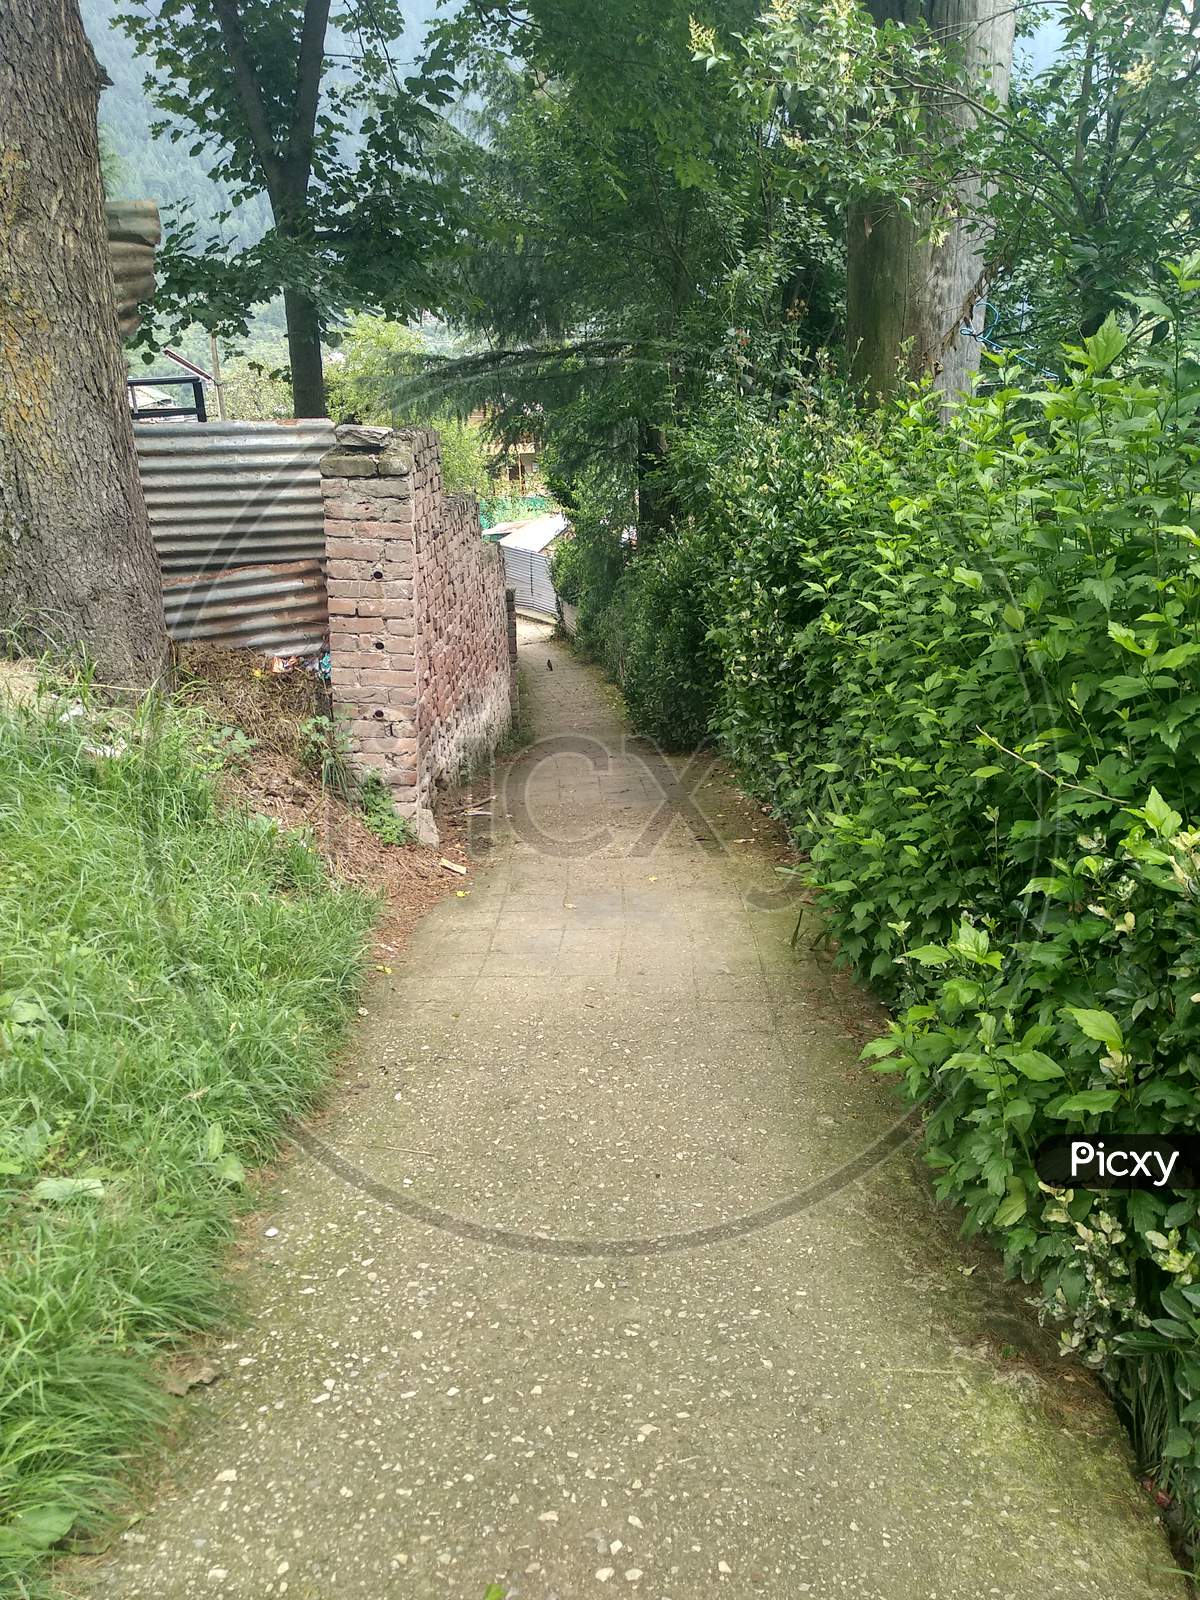 A narrow path